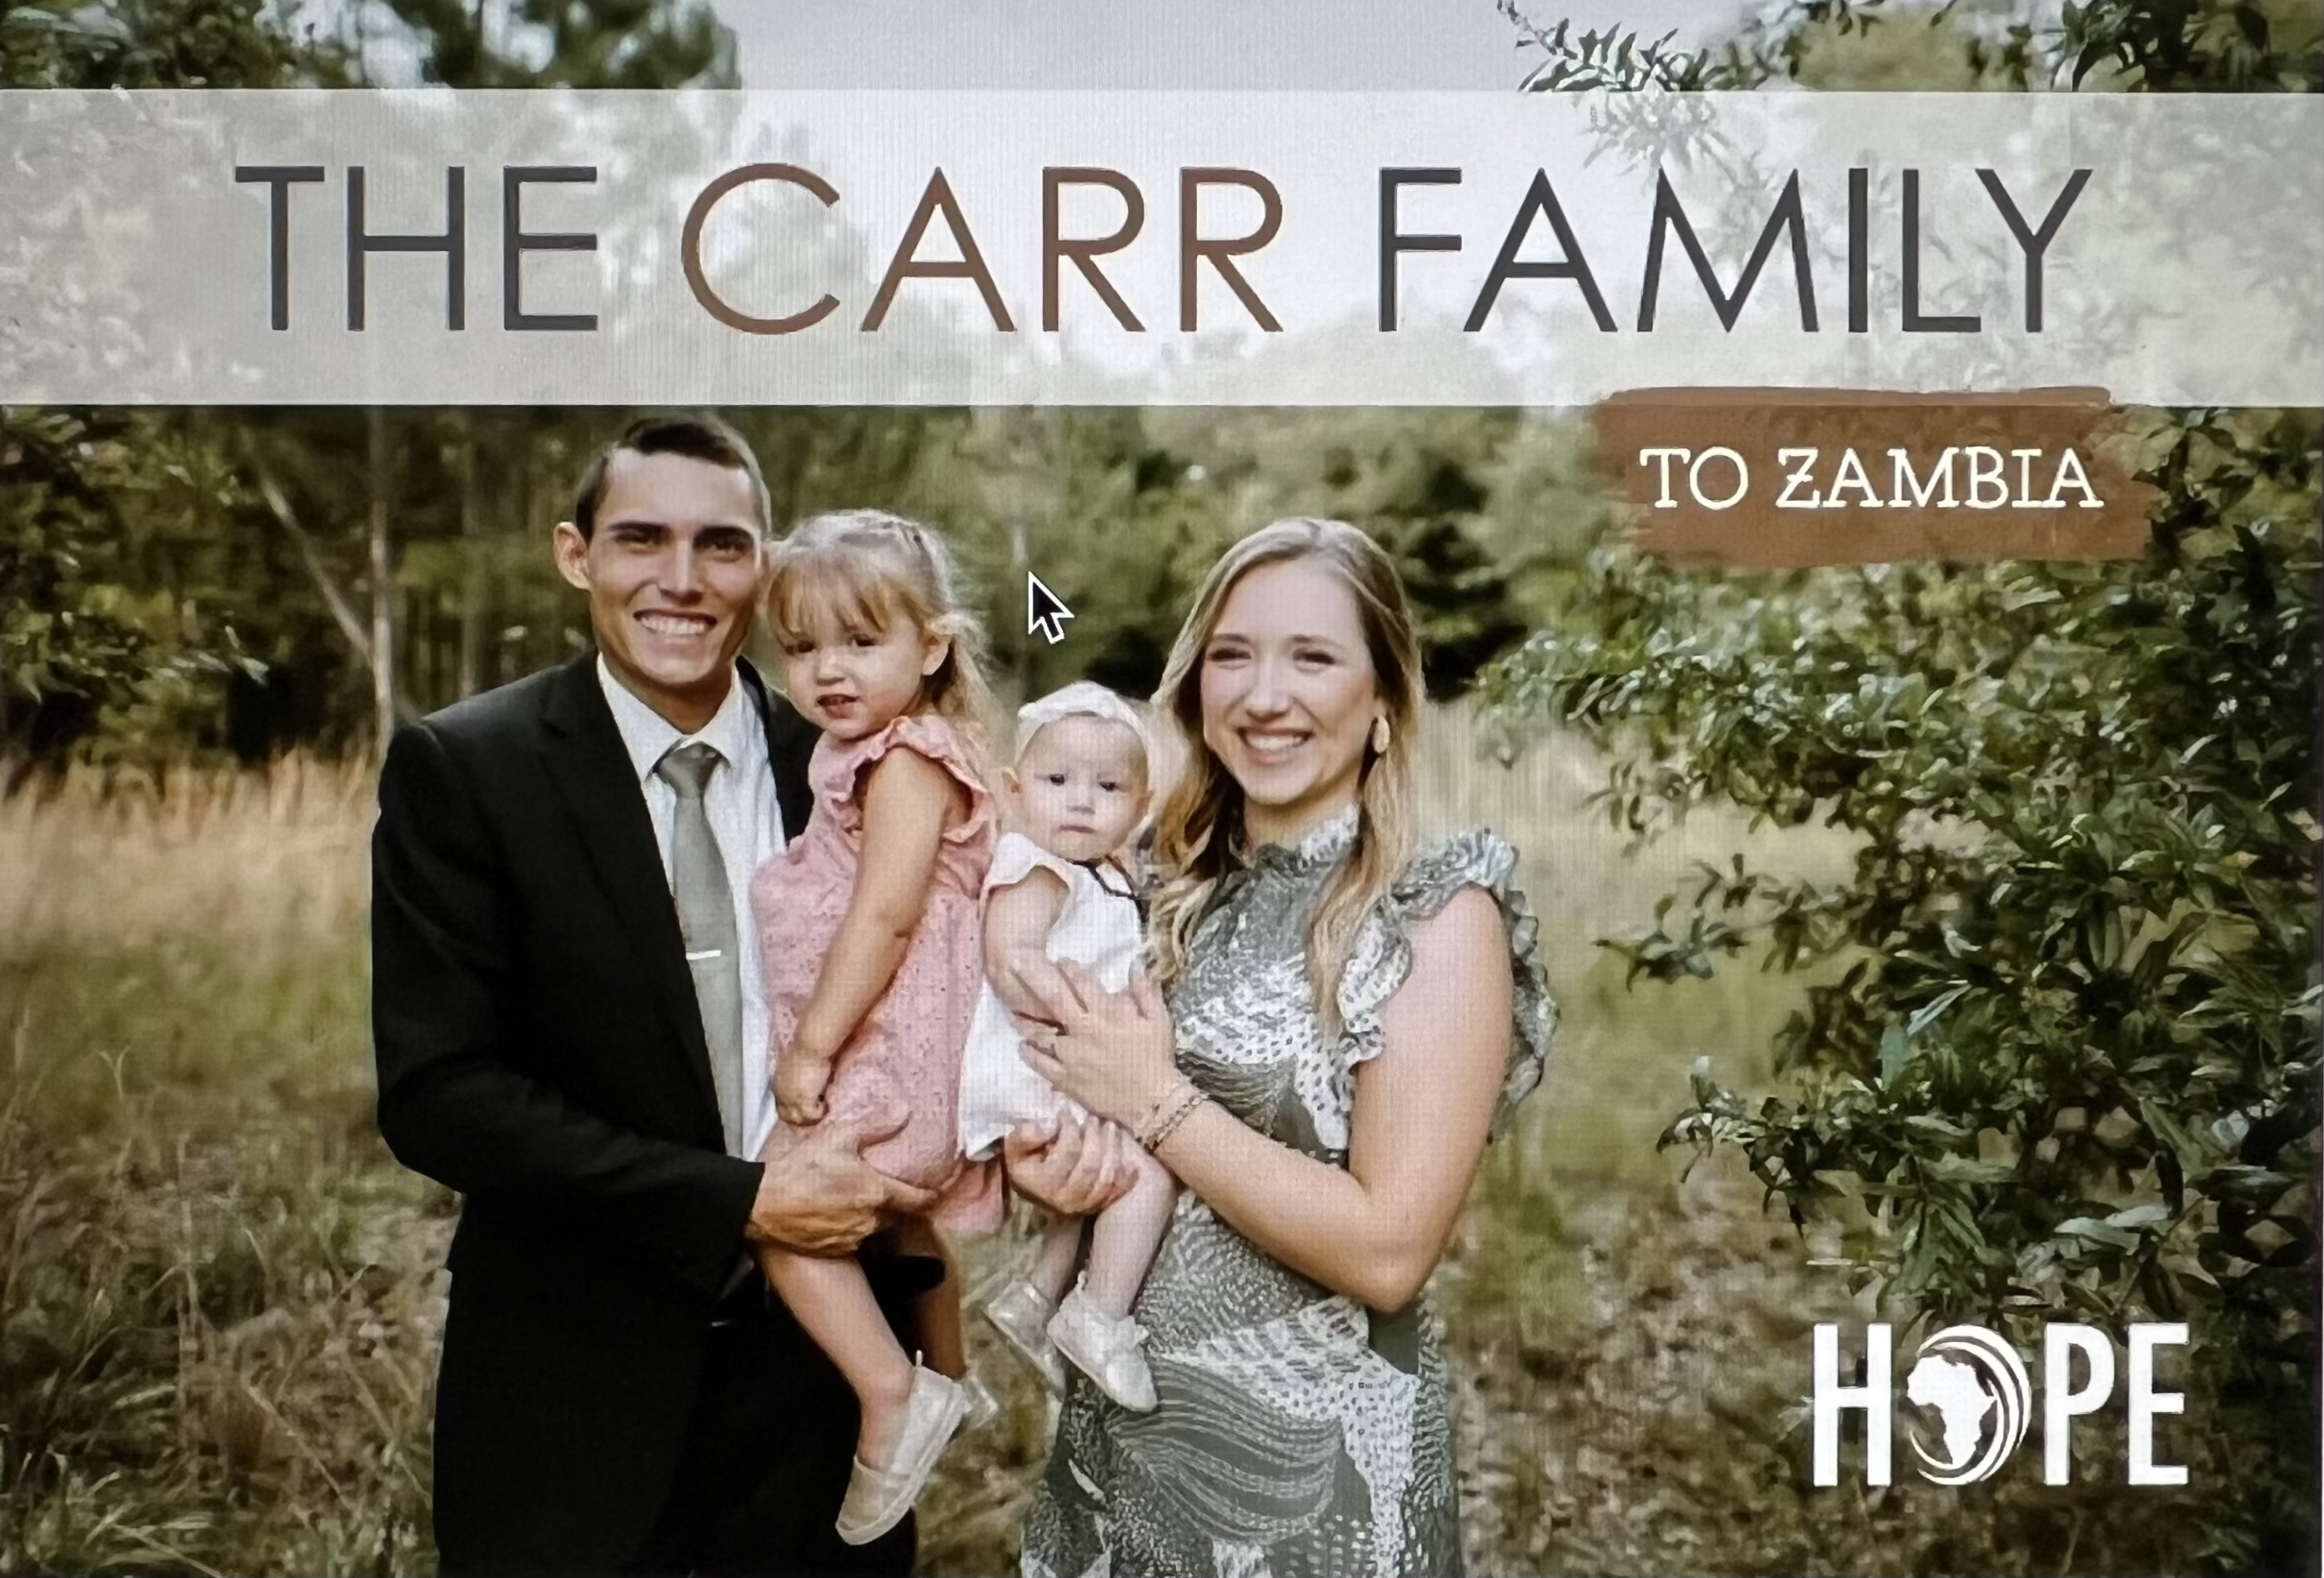 Carr family photo